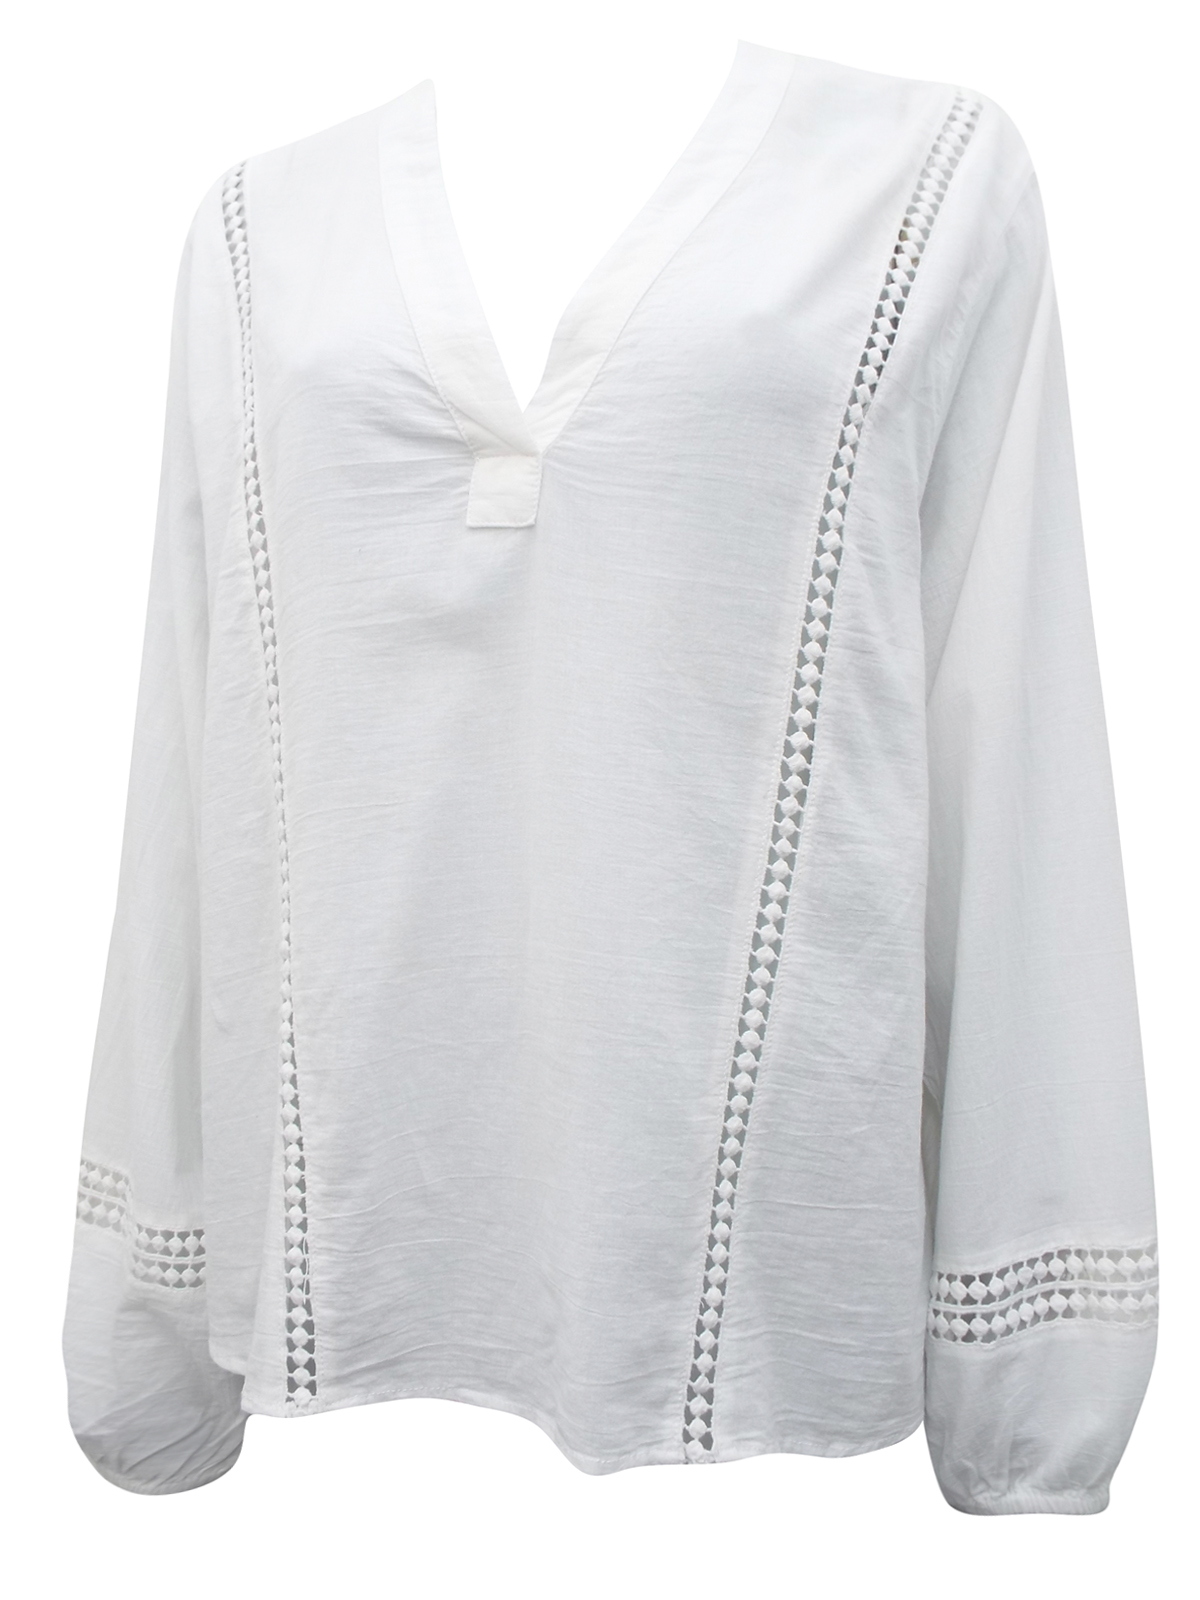 H&M WHITE Embroidered Balloon Sleeve Blouse - Size 6 to 20 (EU 32 to 46)